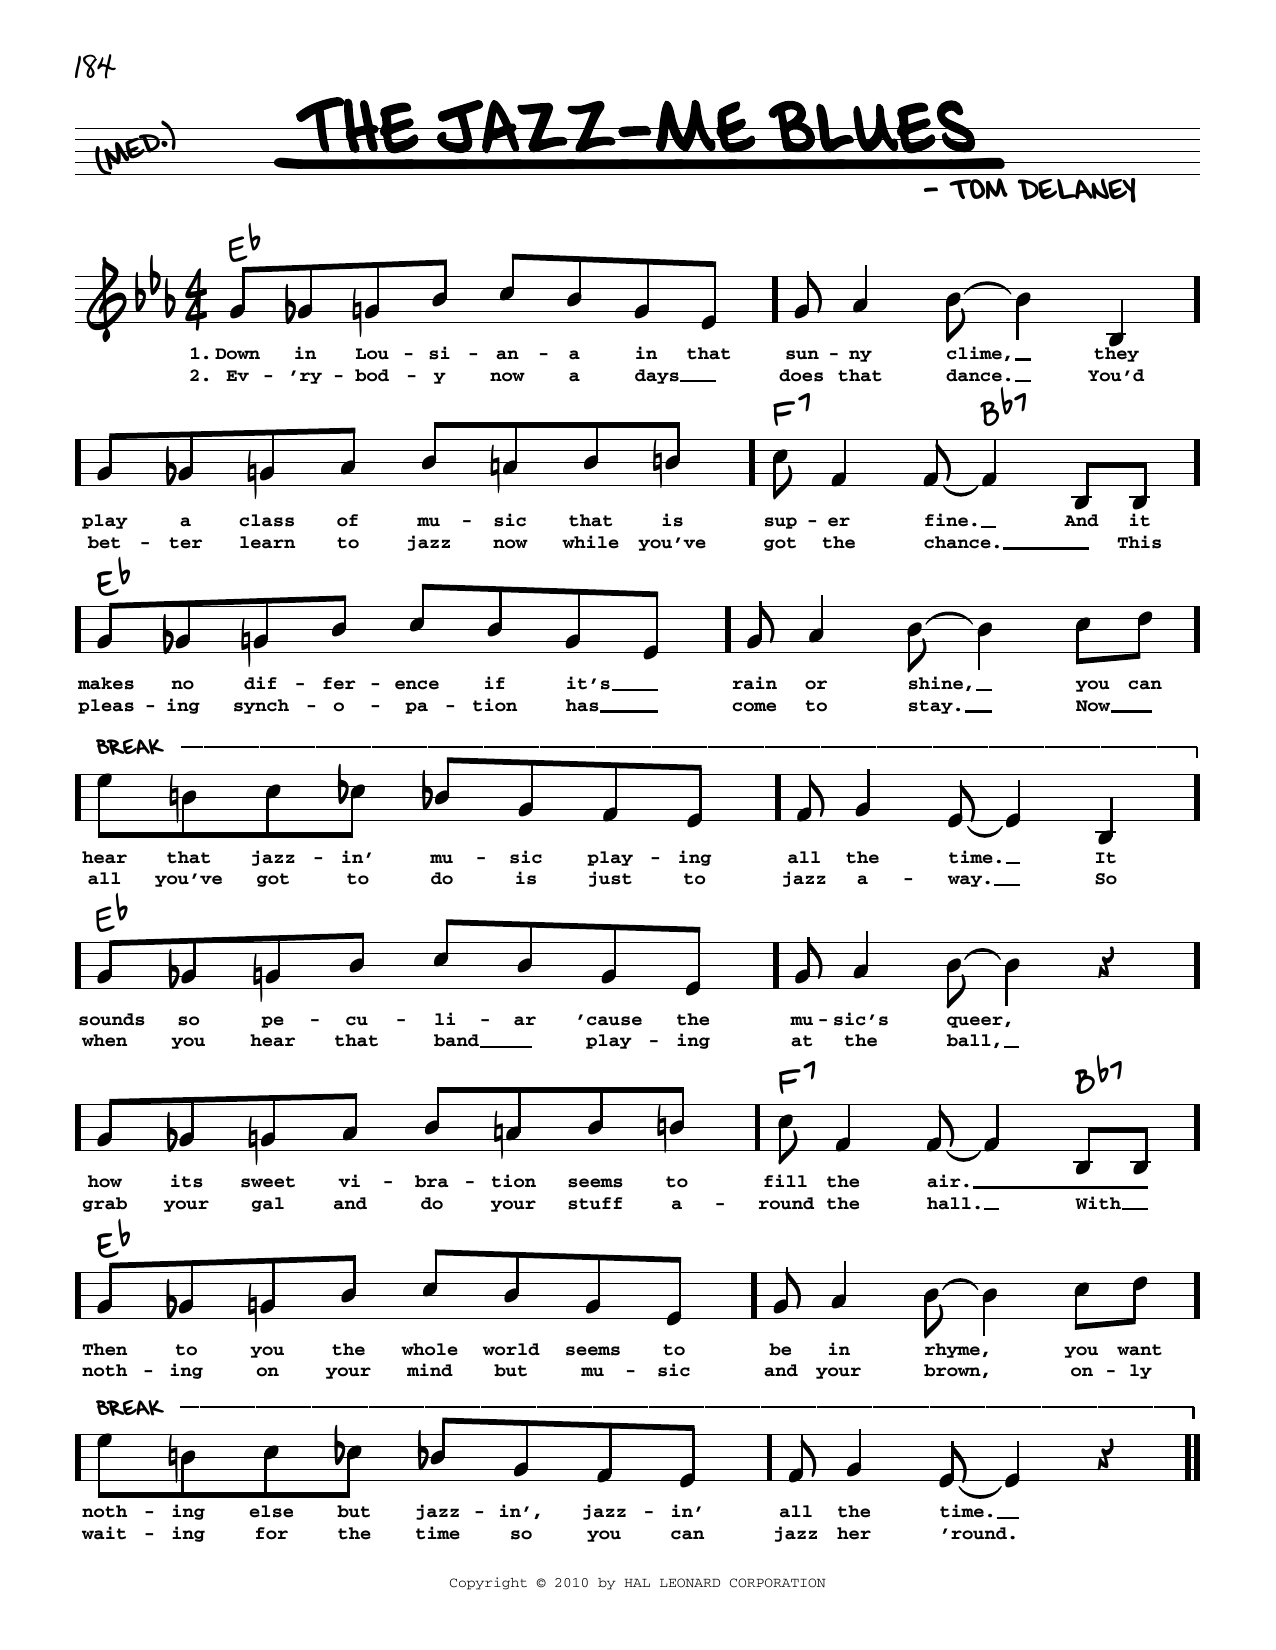 Original Dixieland Jazz Band The Jazz-Me Blues (arr. Robert Rawlins) Sheet Music Notes & Chords for Real Book – Melody, Lyrics & Chords - Download or Print PDF